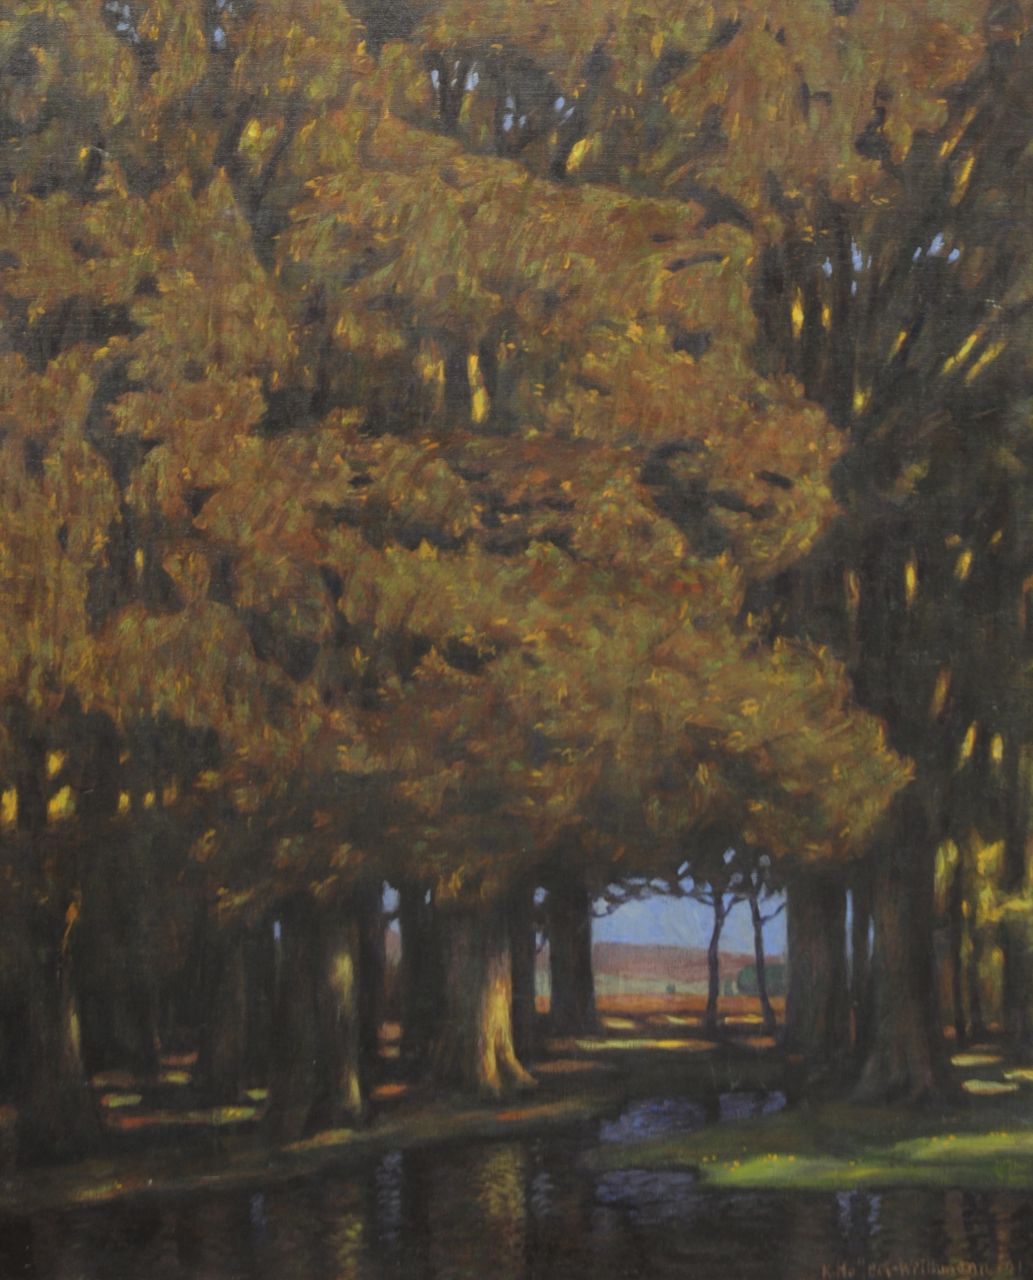 Holleck-Weithmann K.  | Karl Holleck-Weithmann, 't Donkere woud, olieverf op doek 94,7 x 77,0 cm, gesigneerd rechtsonder en gedateerd 1911